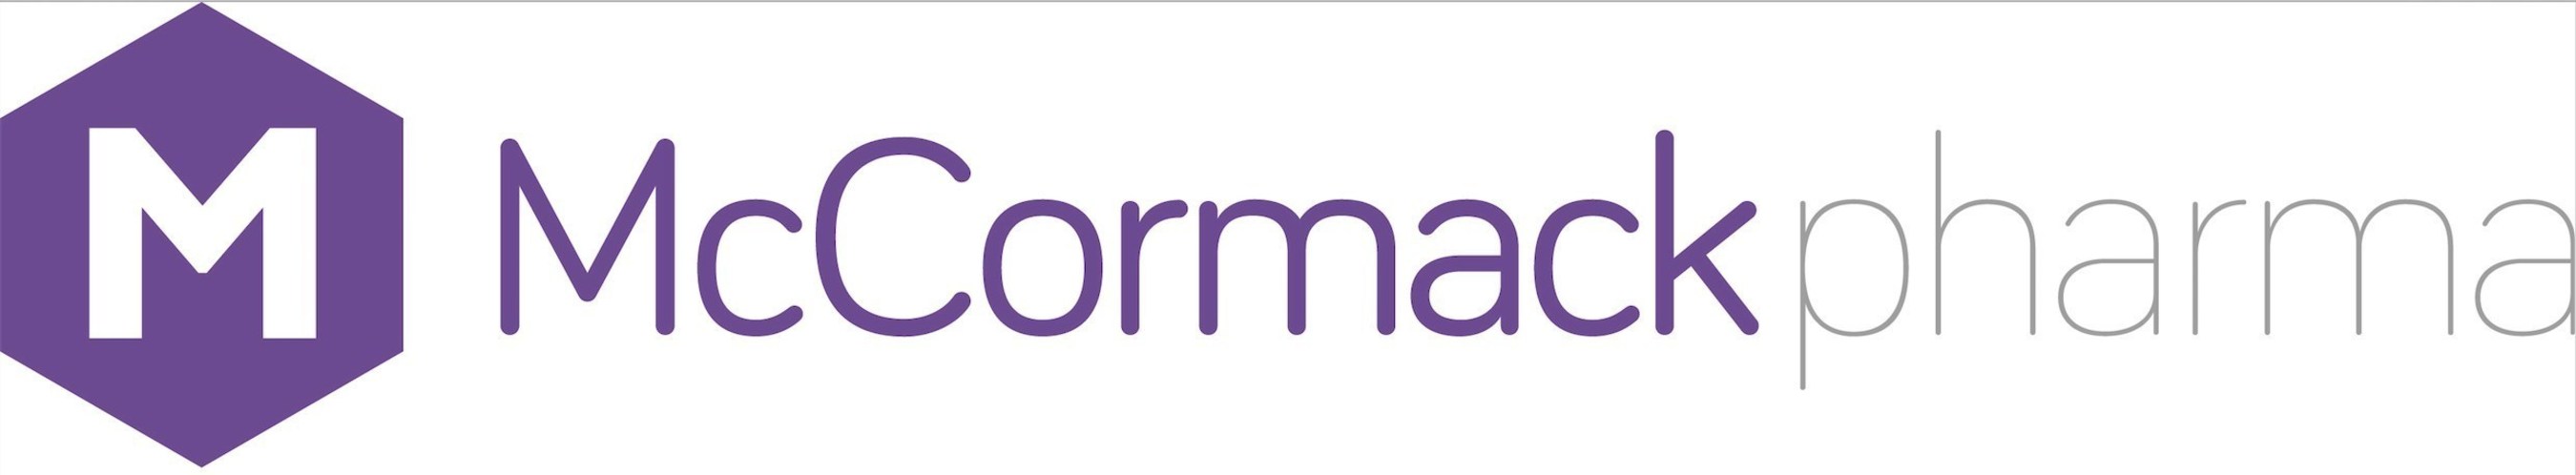 McCormack Pharma logo